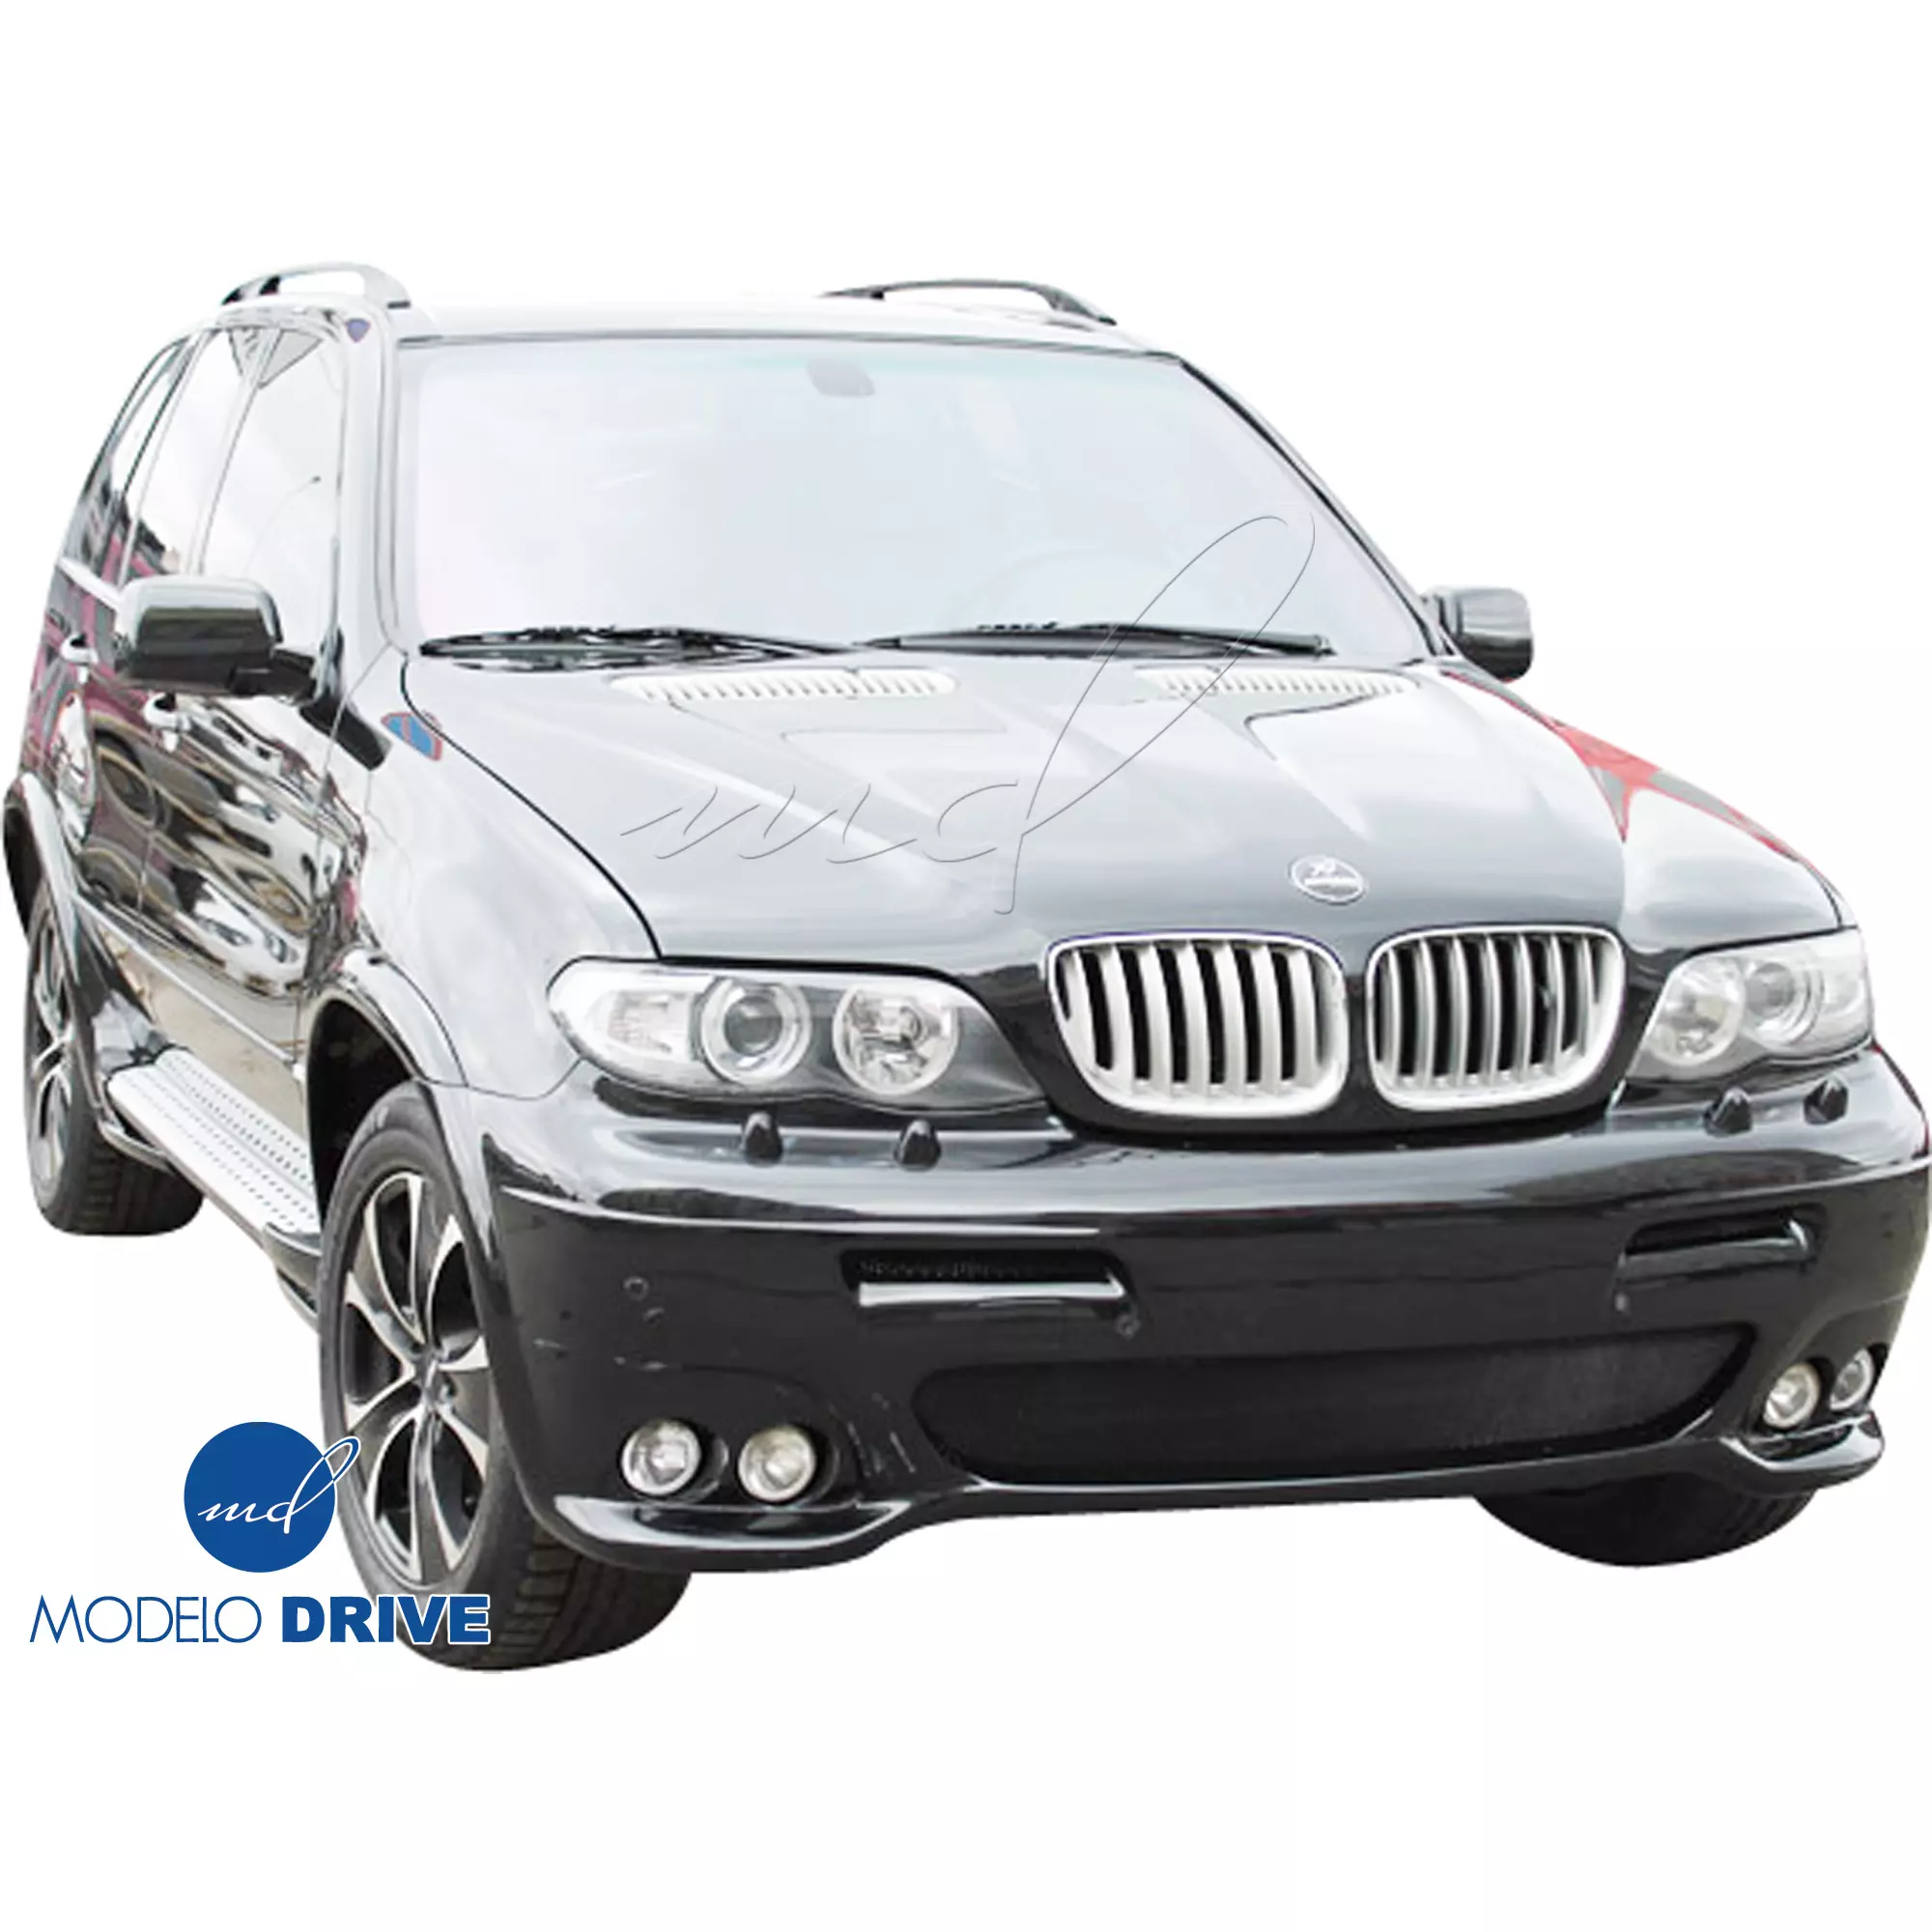 ModeloDrive FRP HAMA Body Kit 3pc > BMW X5 E53 2000-2006 > 5dr - Image 13